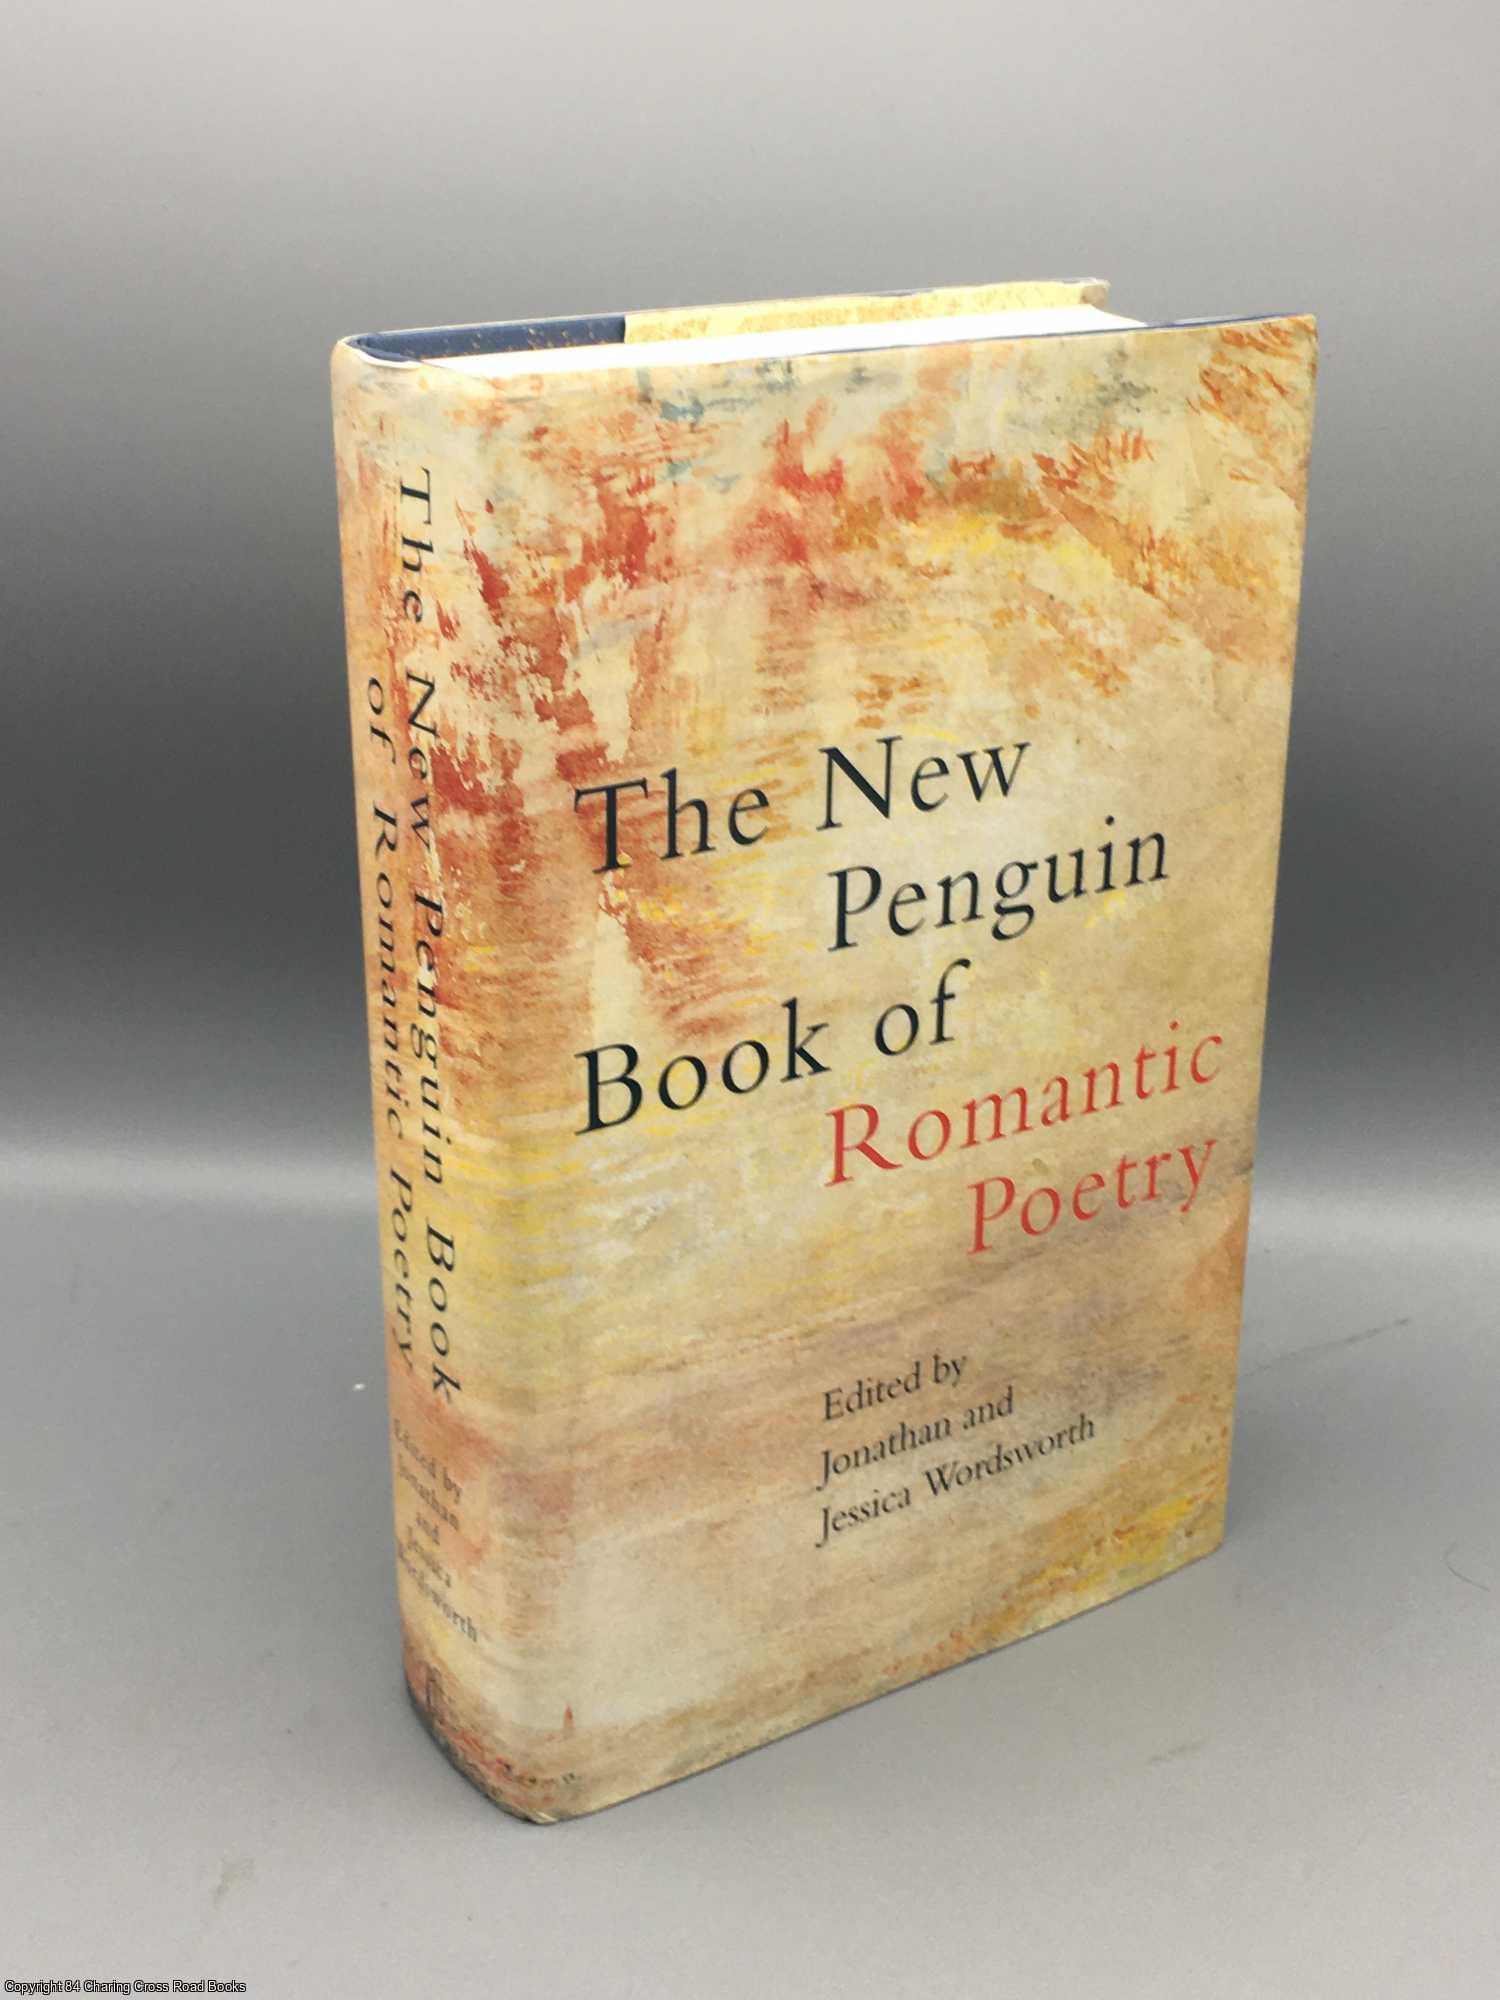 Wordsworth, Jonathan & Jessica - The New Penguin Book of Romantic Poetry